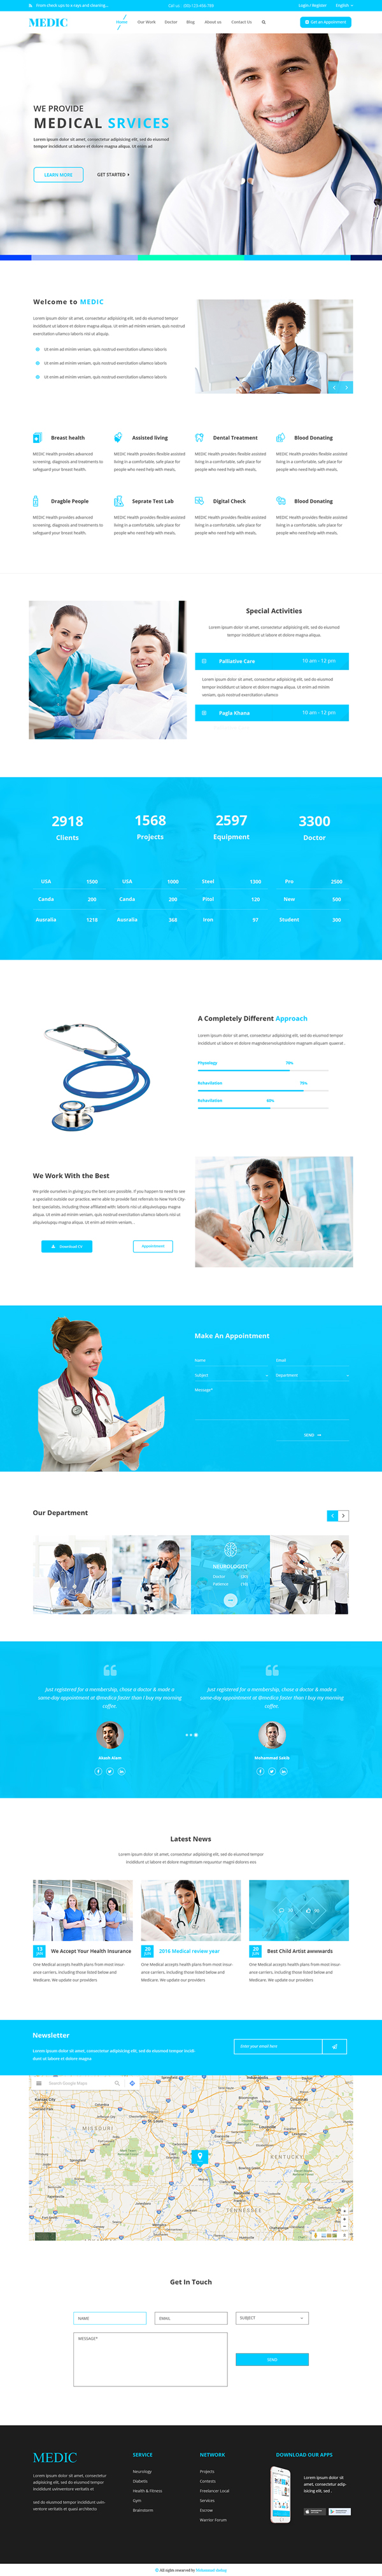 Free Medical Website Template PSD